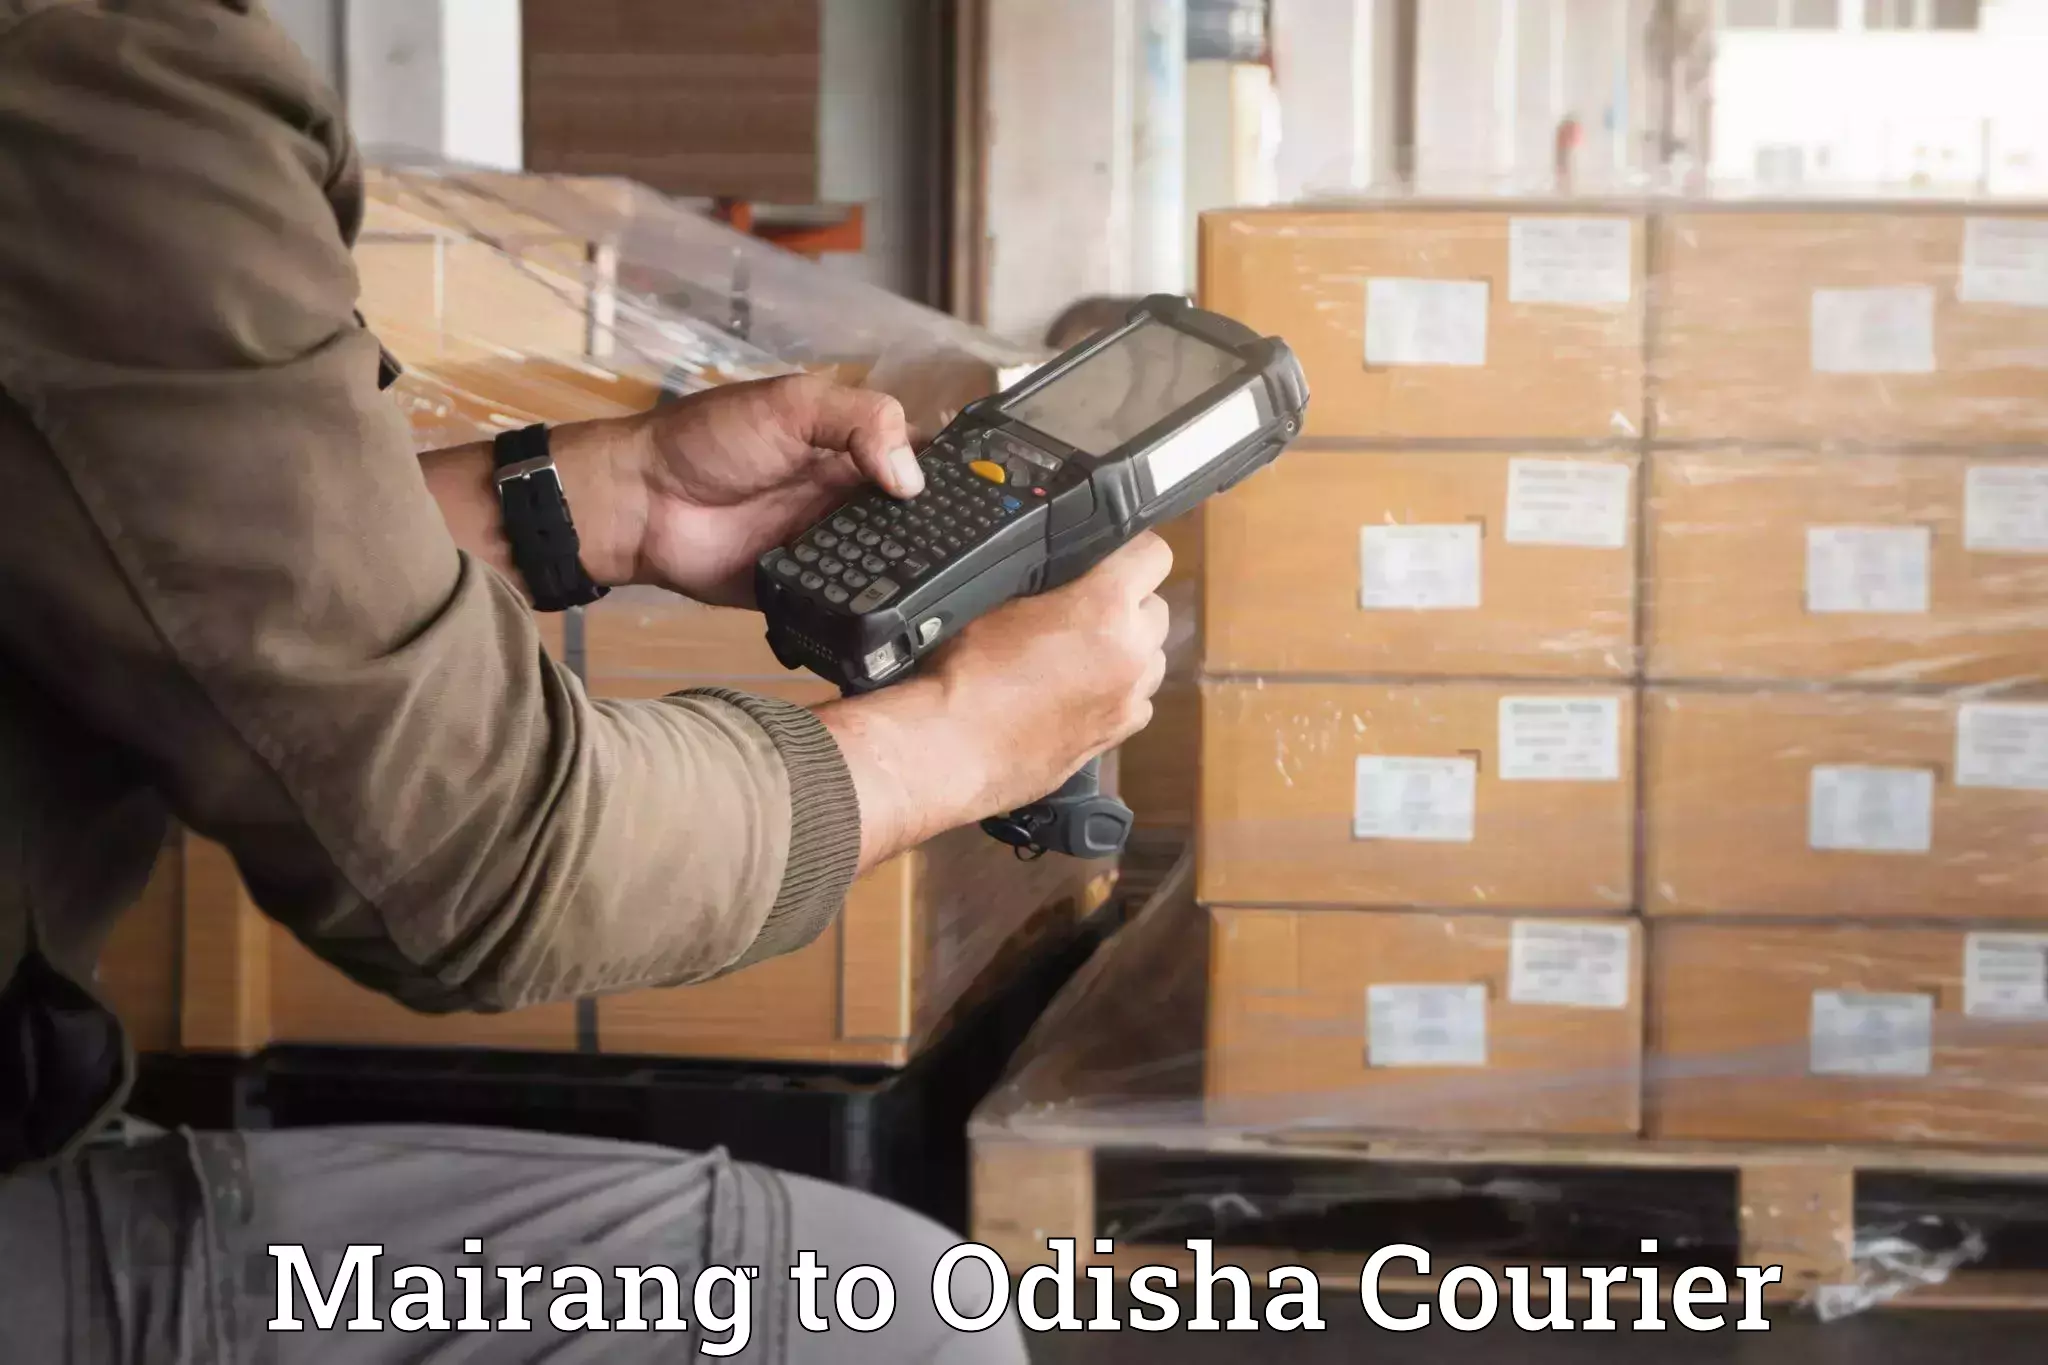 Professional moving assistance in Mairang to Balikuda